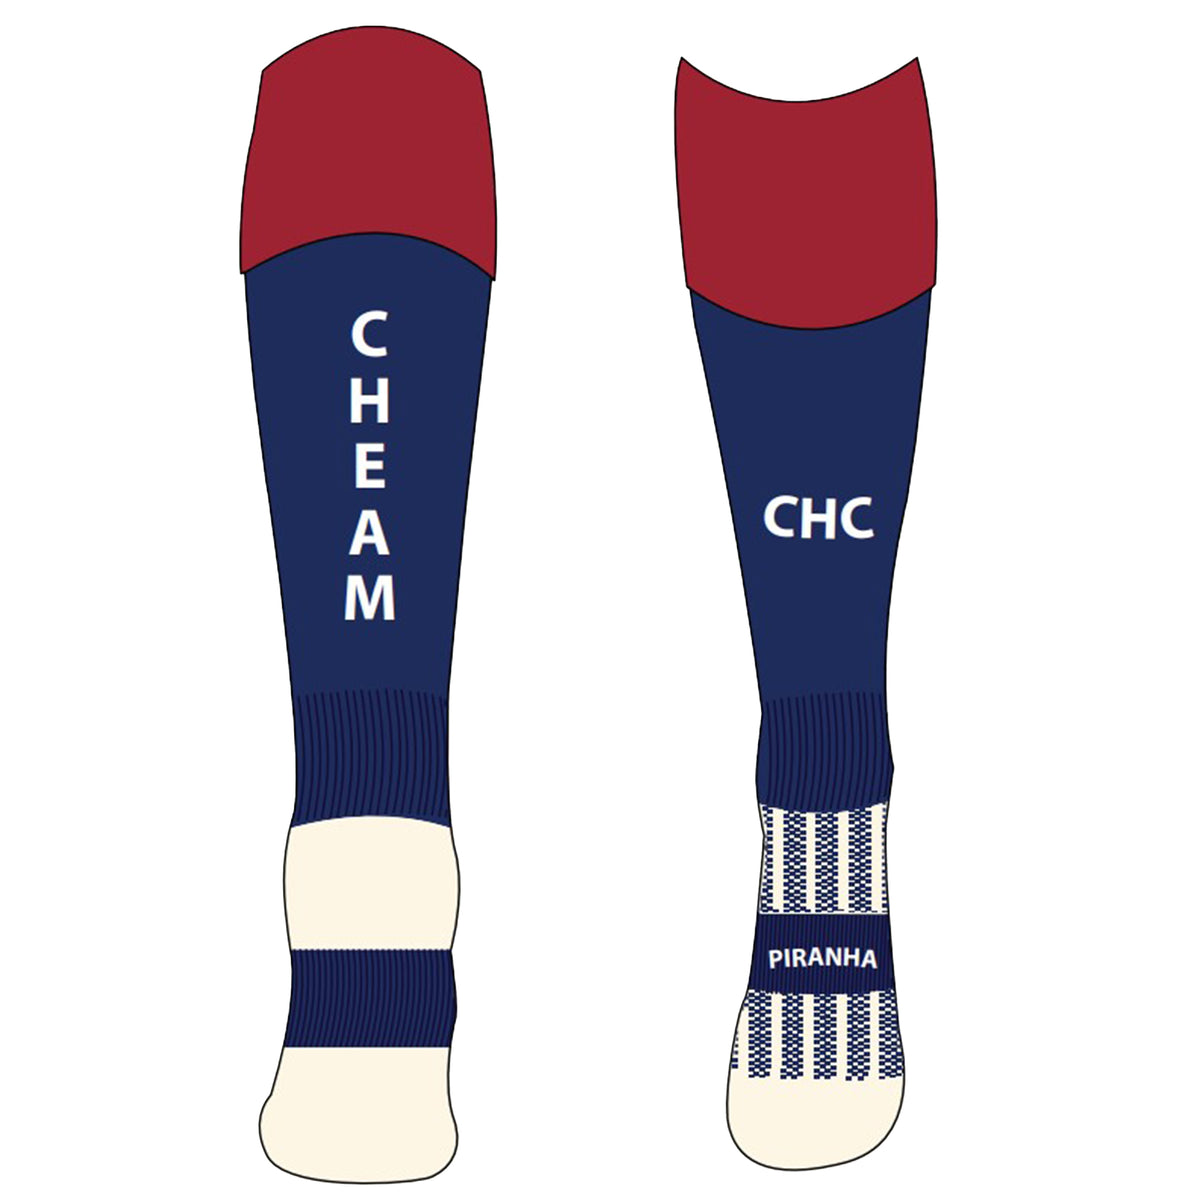 Cheam HC 23 Home Socks: Navy / Maroon